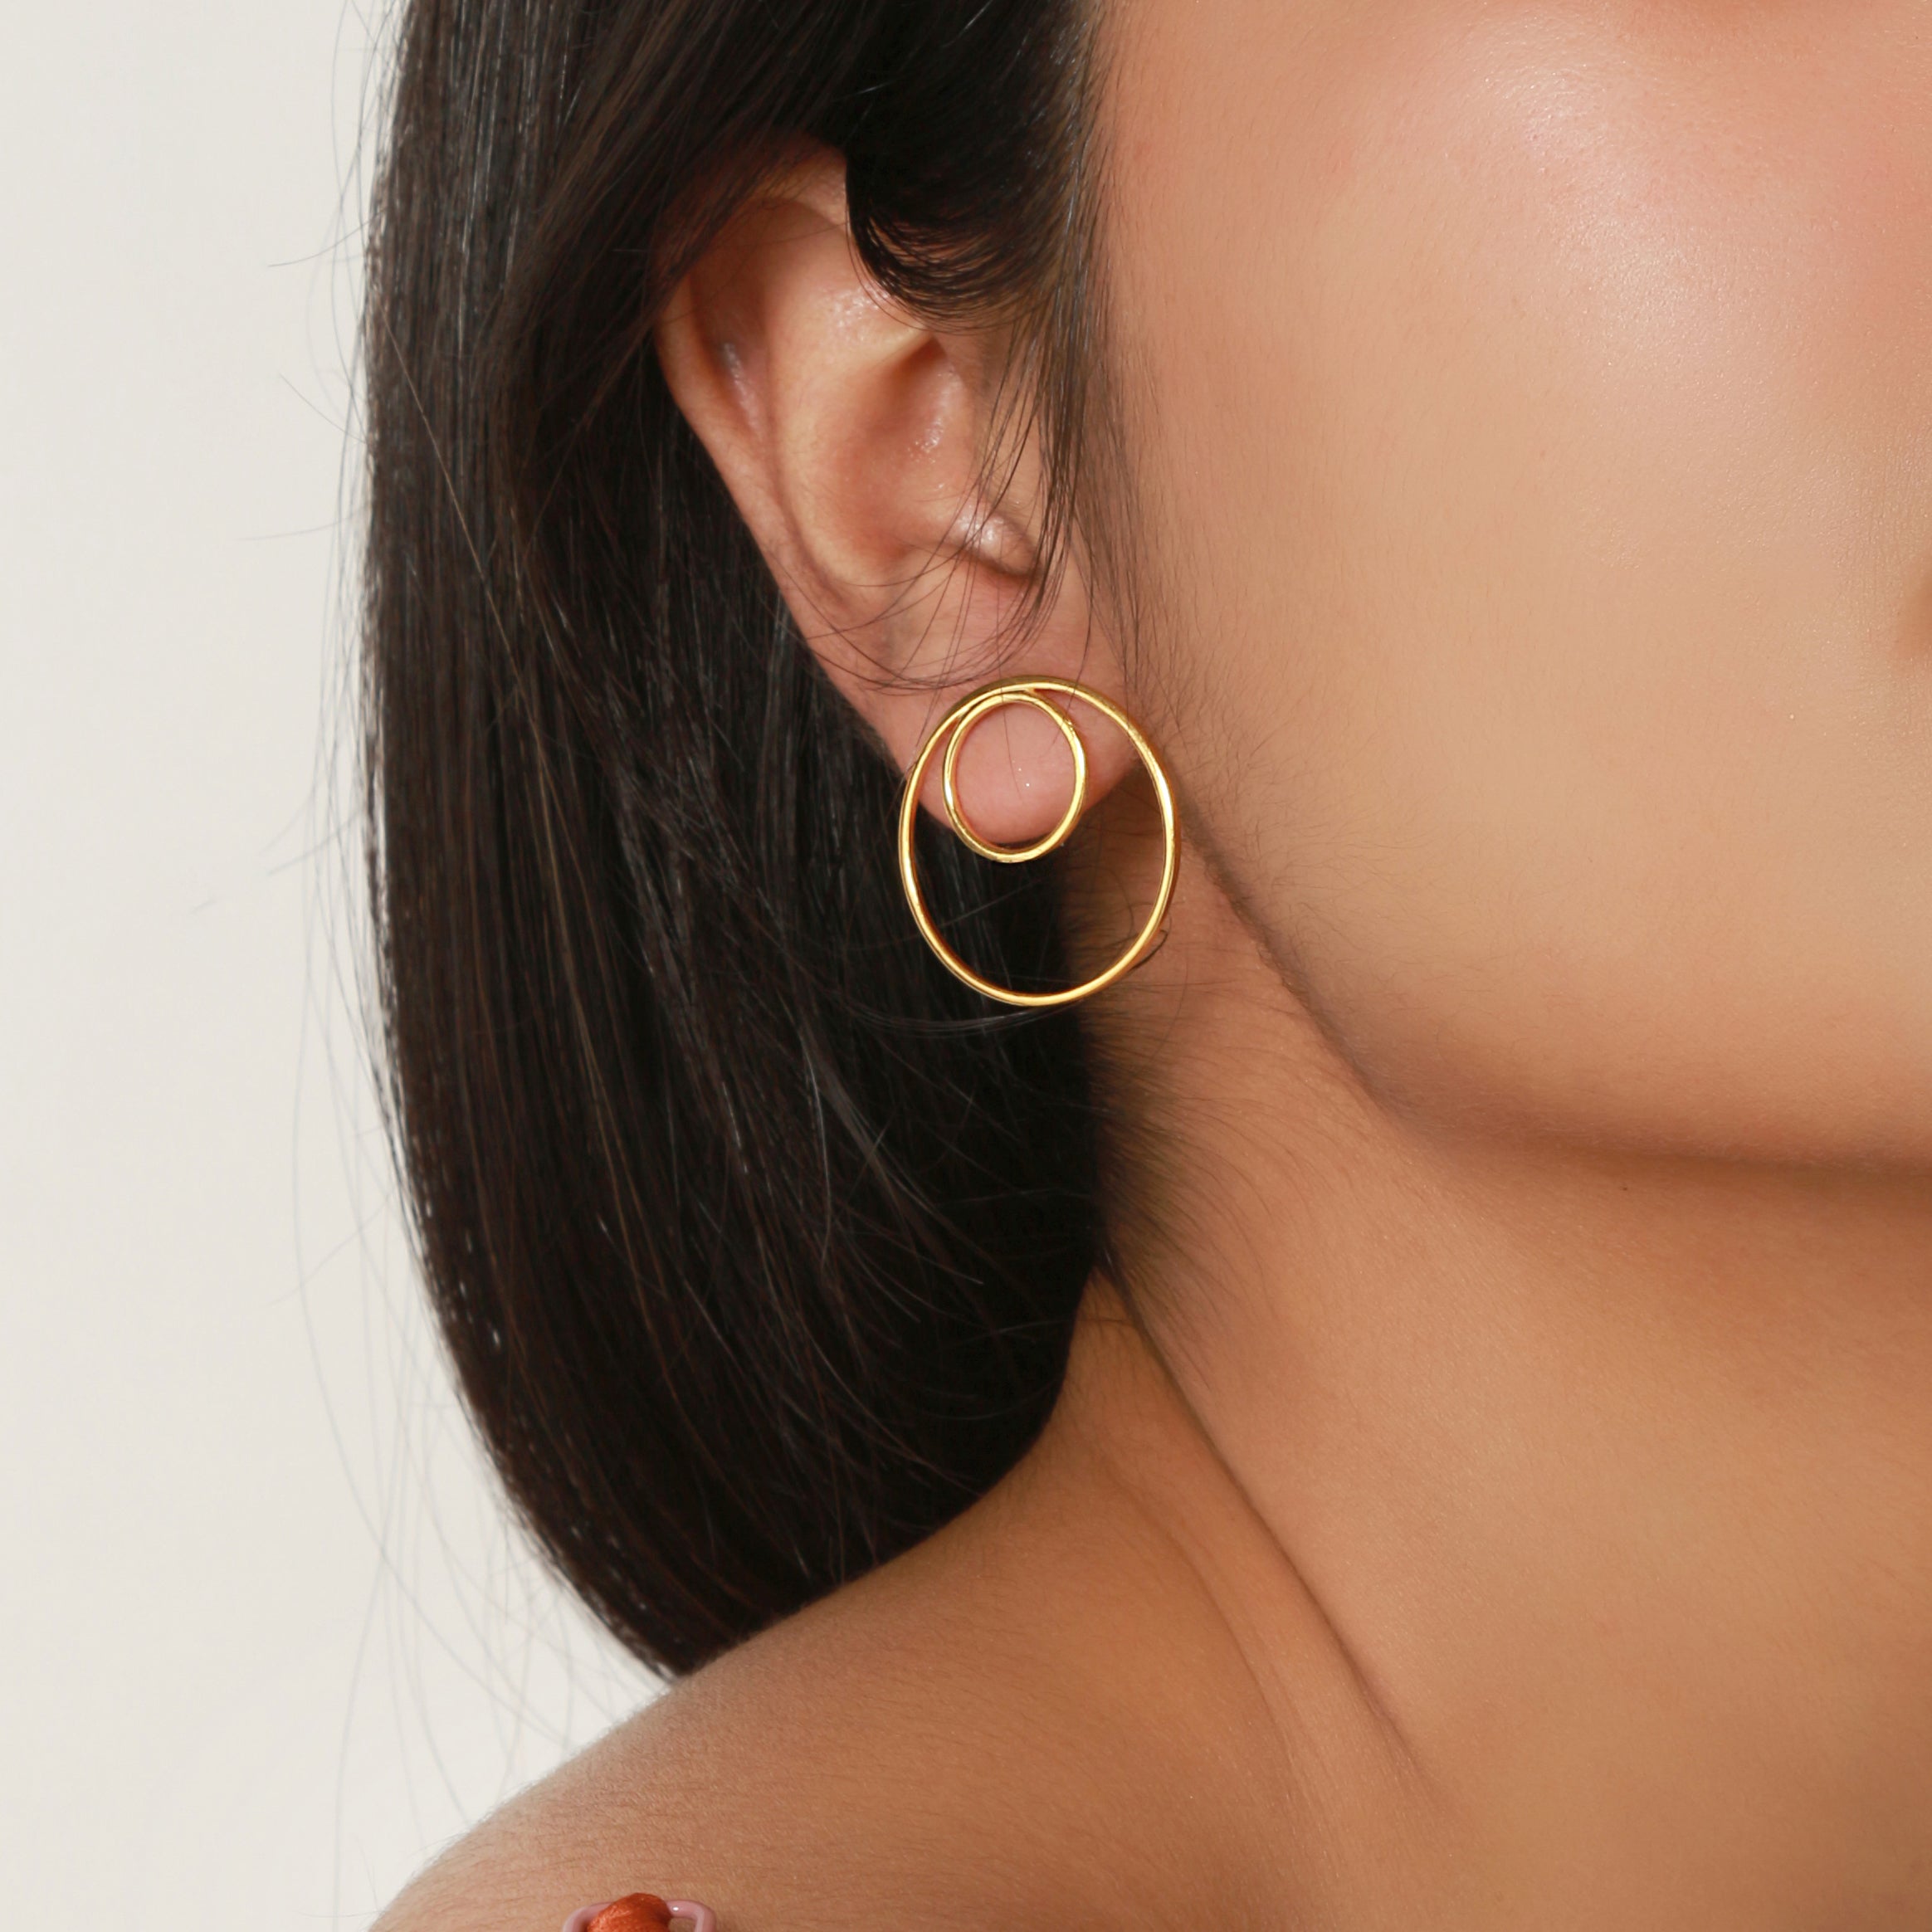 Shop 22K Gold Indian Navratna Earrings | Jadau Chandbalis